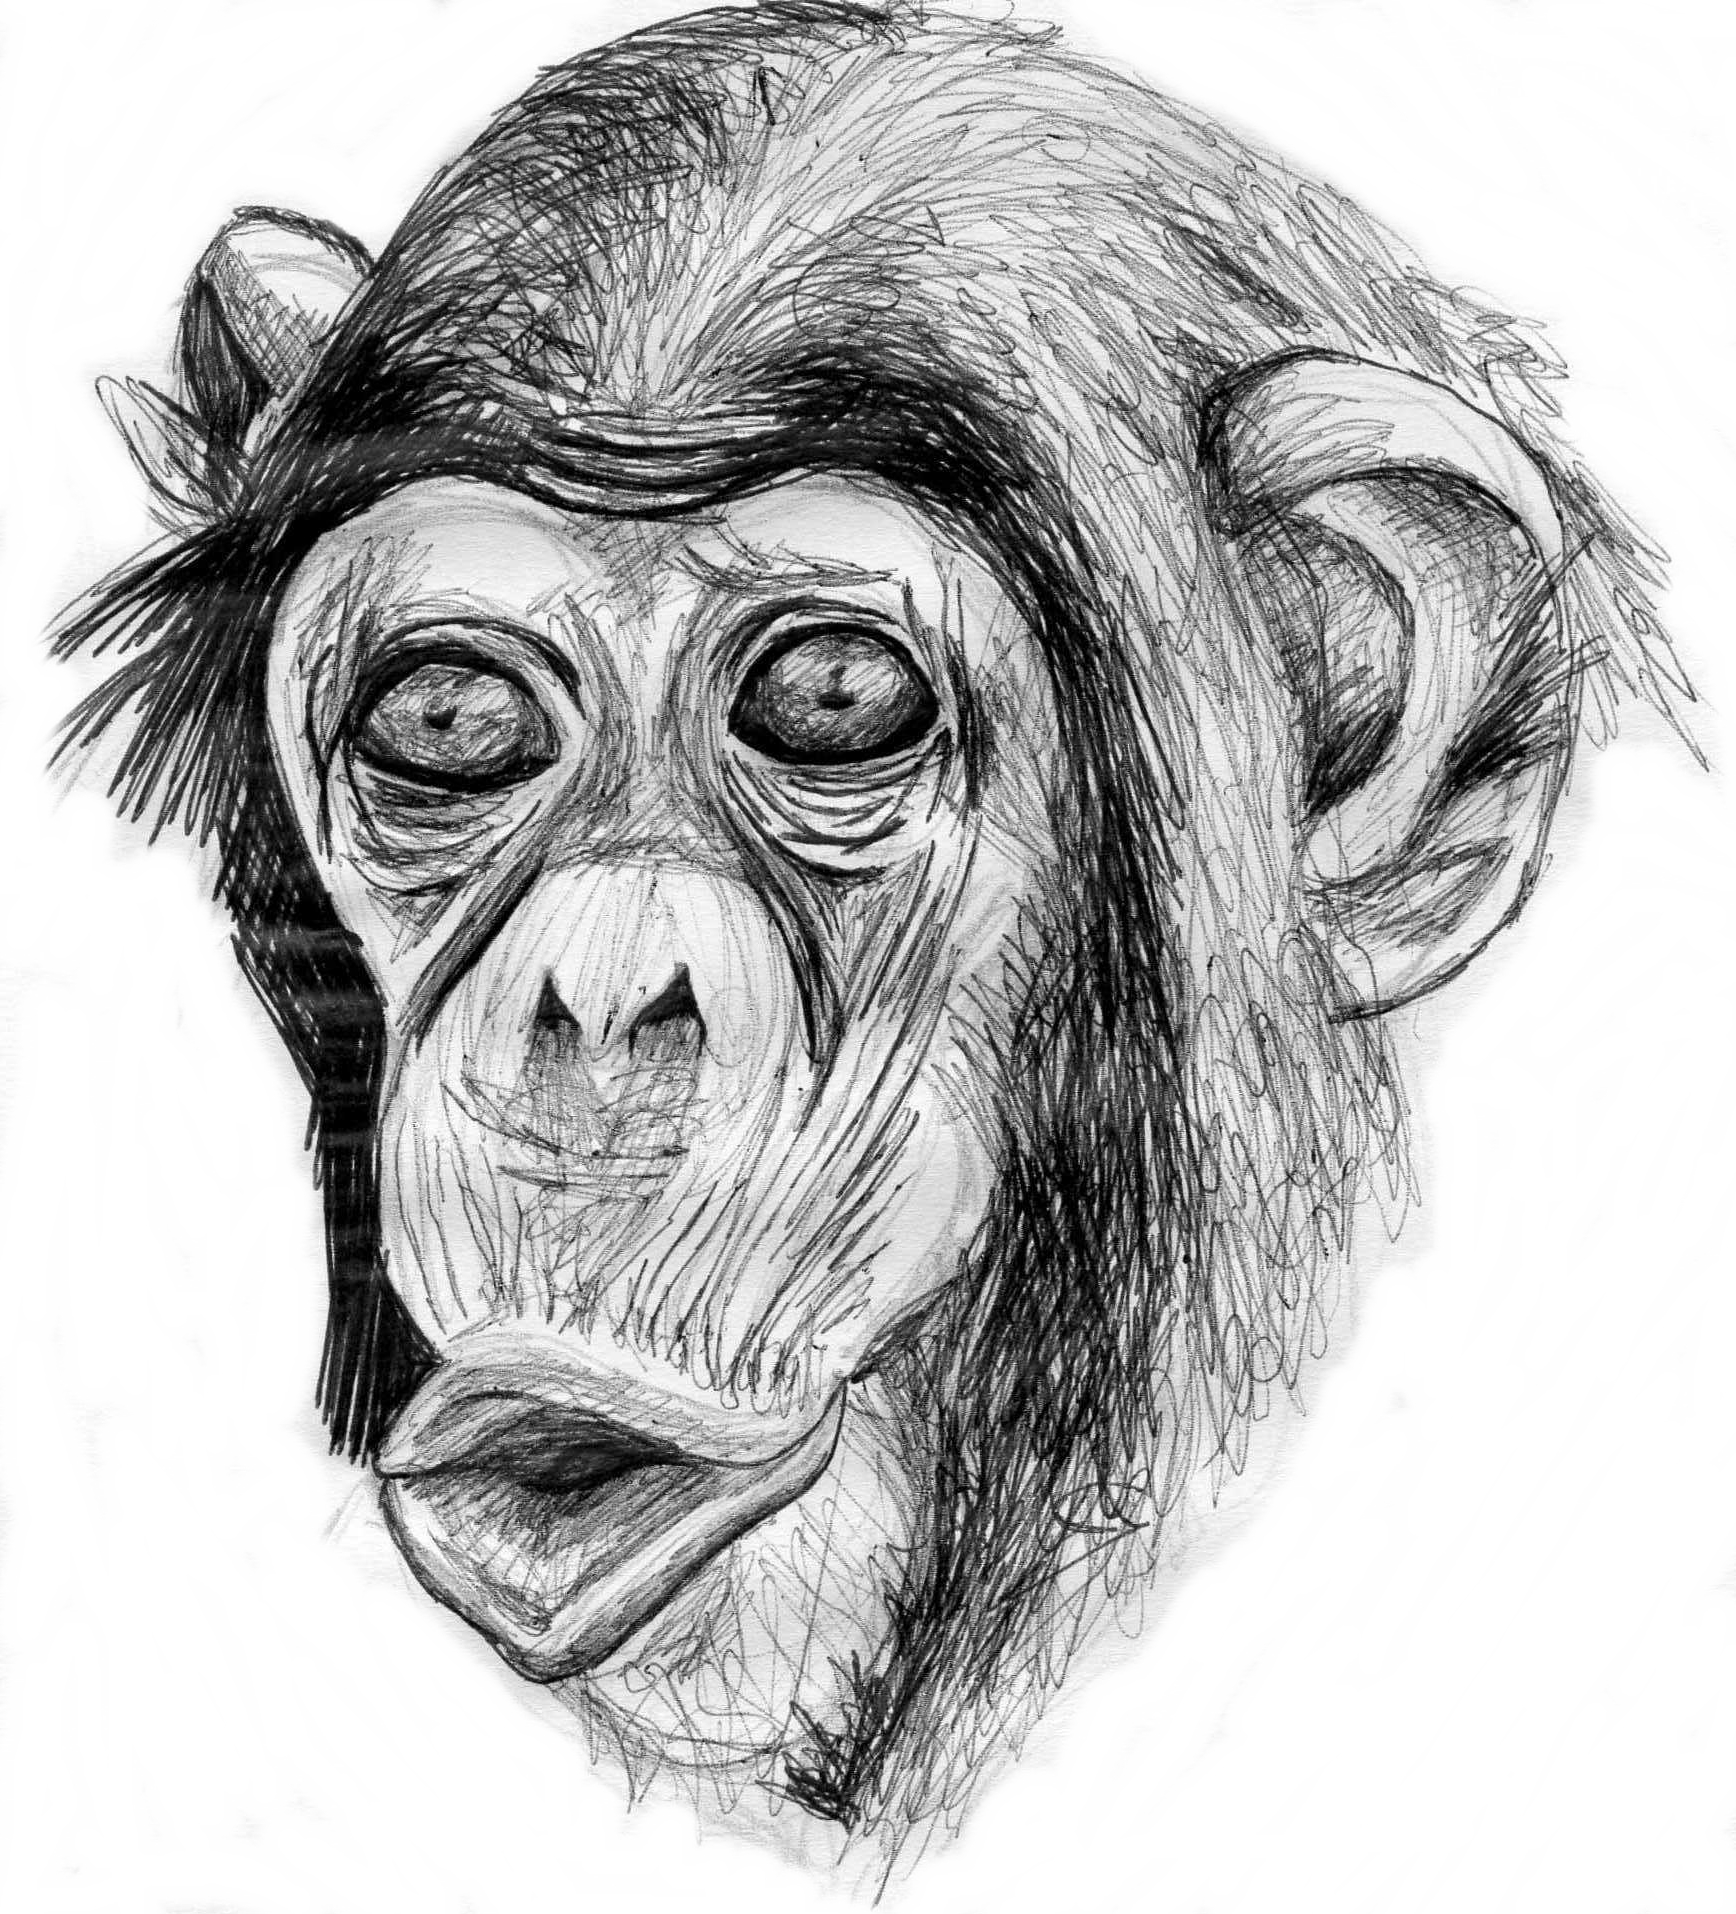 Рисунок макаки. Обезьяна рисунок. Обезьяна карандашом. Рисунок обезьяны карандашом для срисовки. Обезьянка рисунок карандашом.